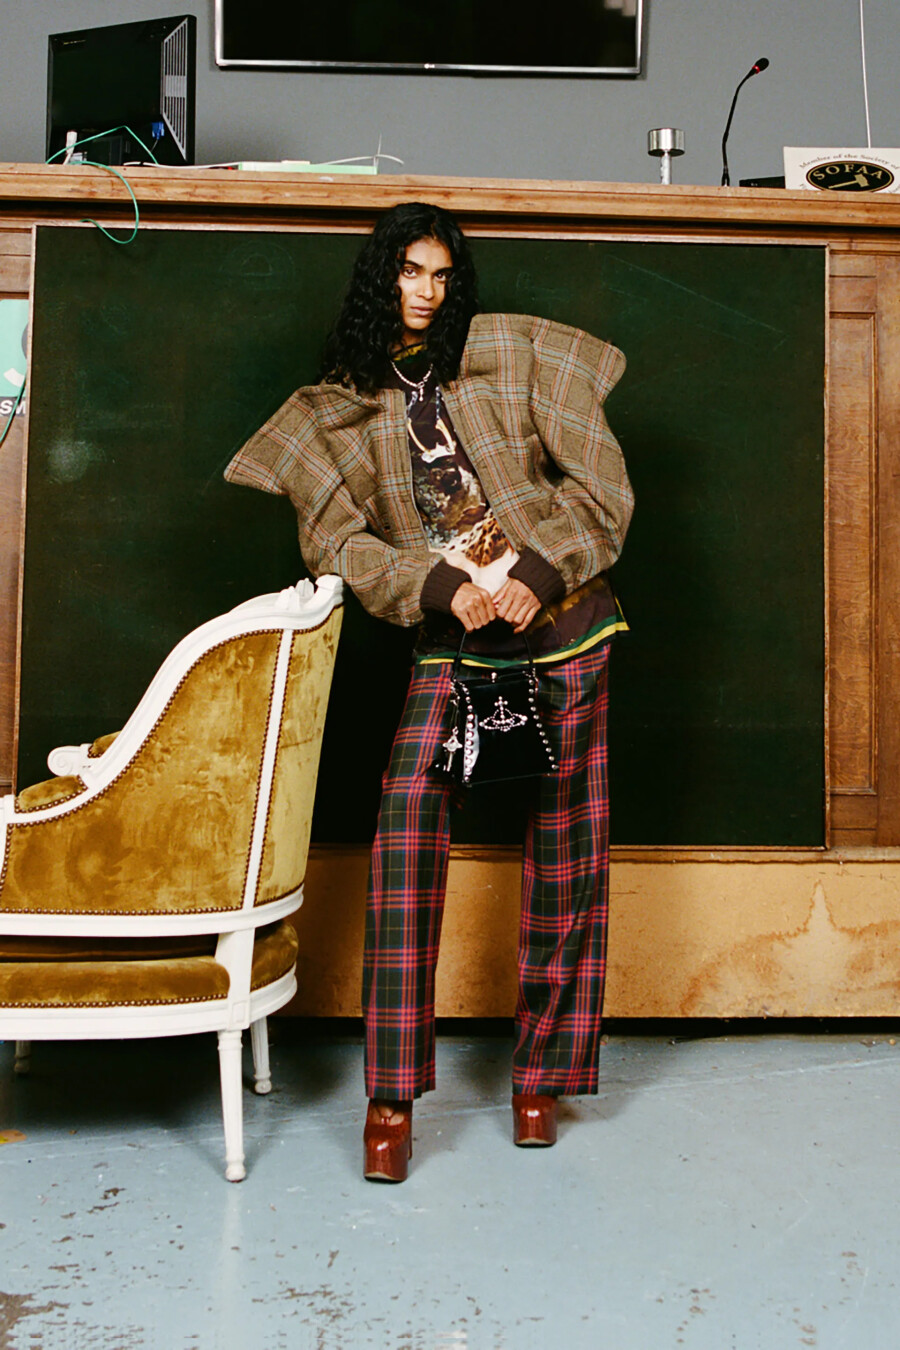 Pantalones tartan Vivienne Westwood tendencias para Navidad Rabat Magazine